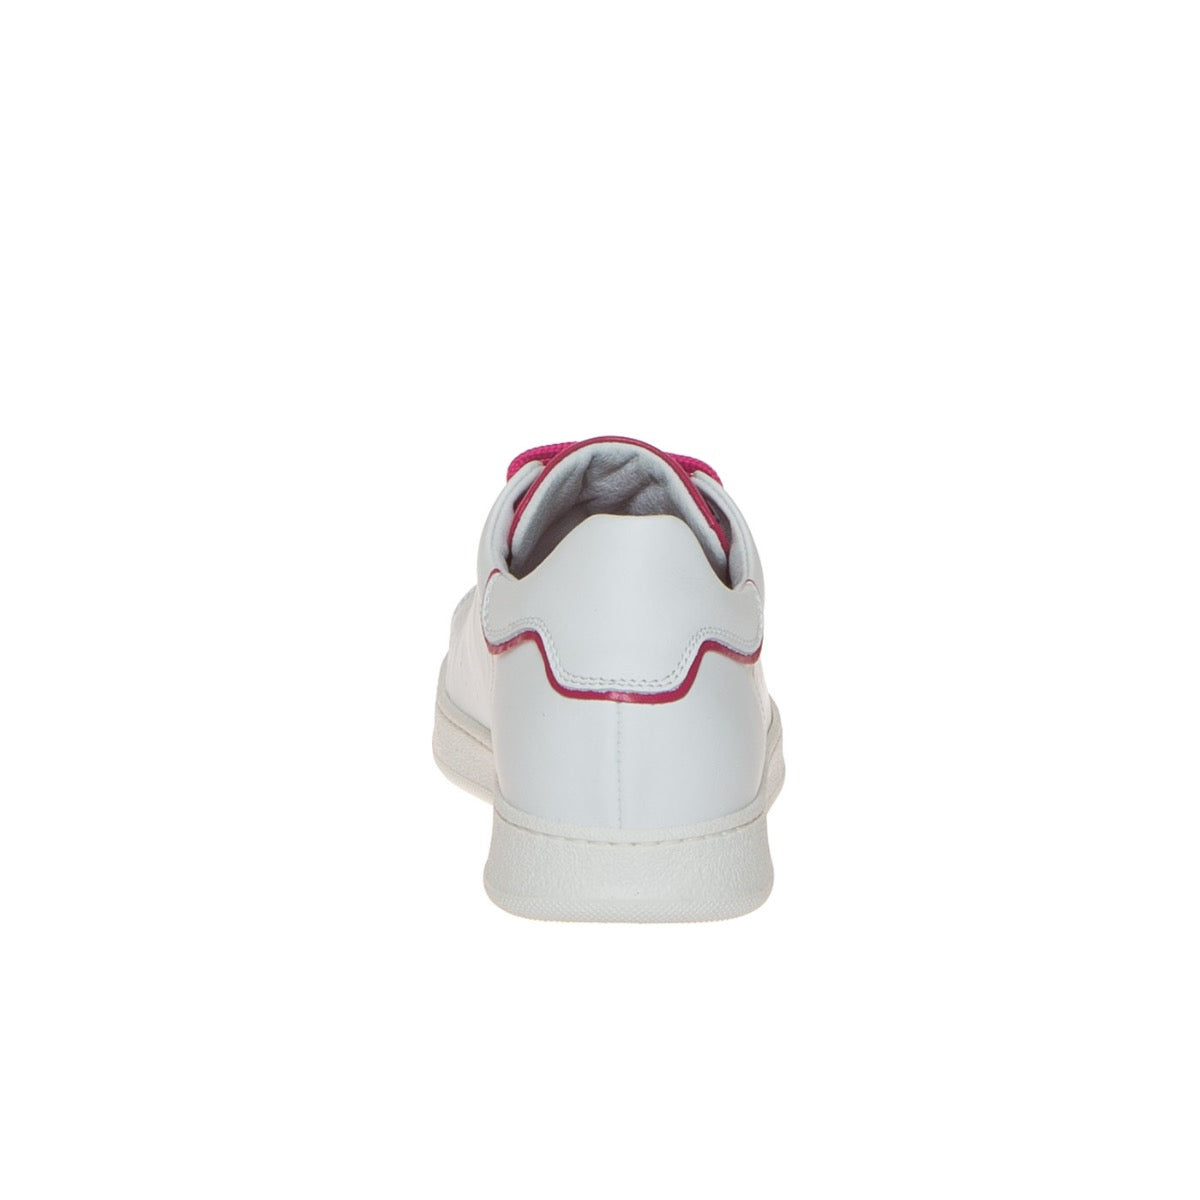 tyko-20037-sneaker-donna-pelle-bianco-fuxia